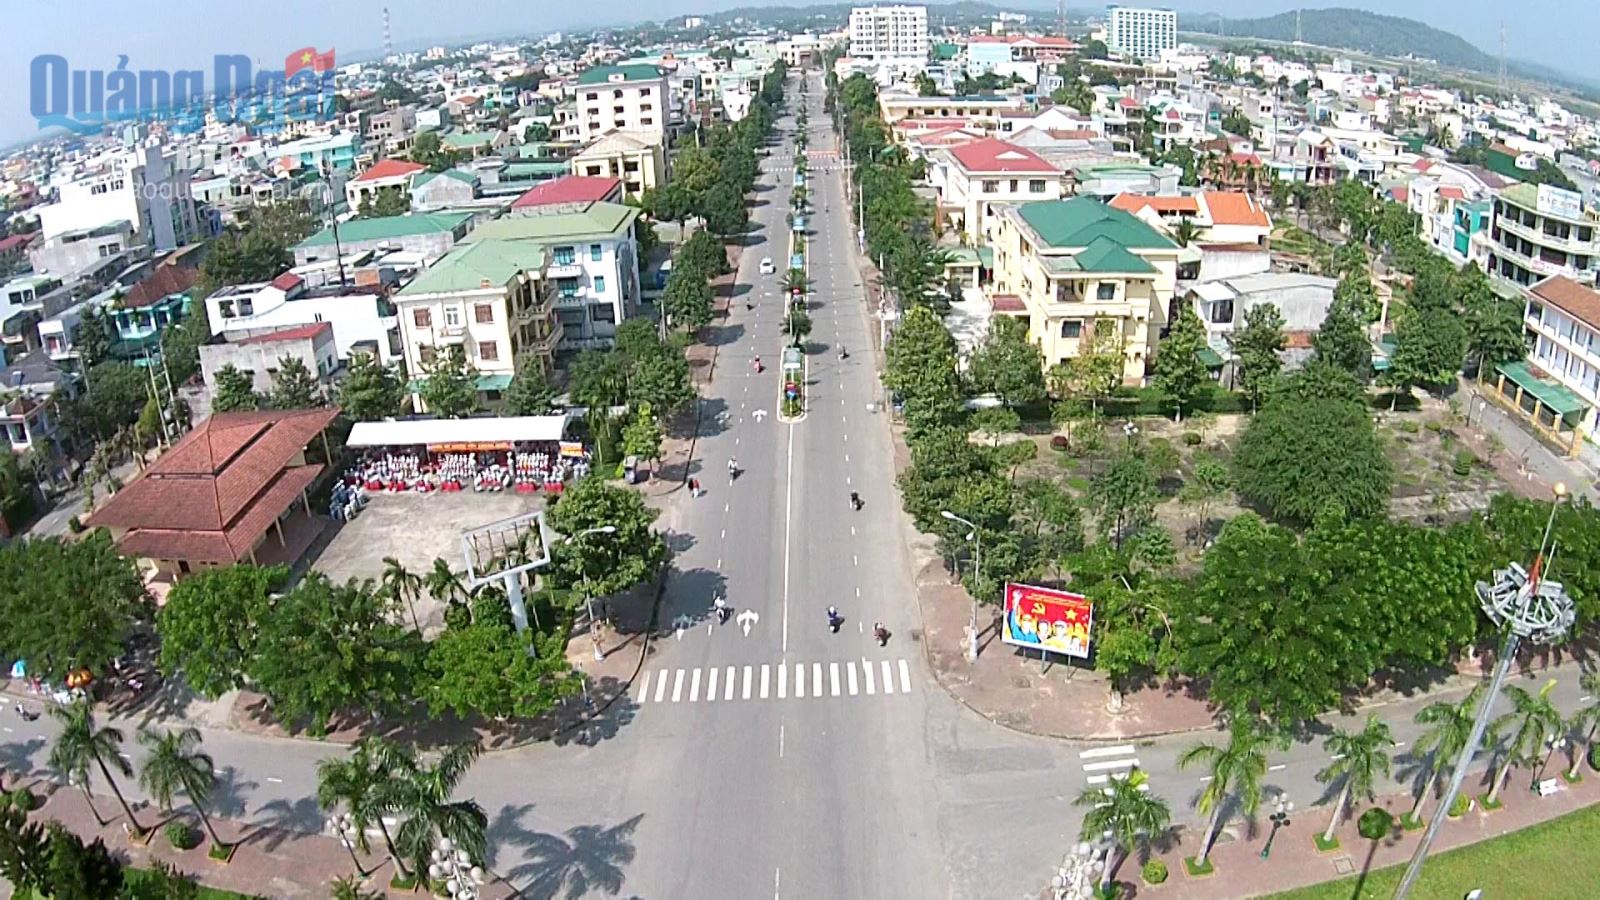 Quang Ngai